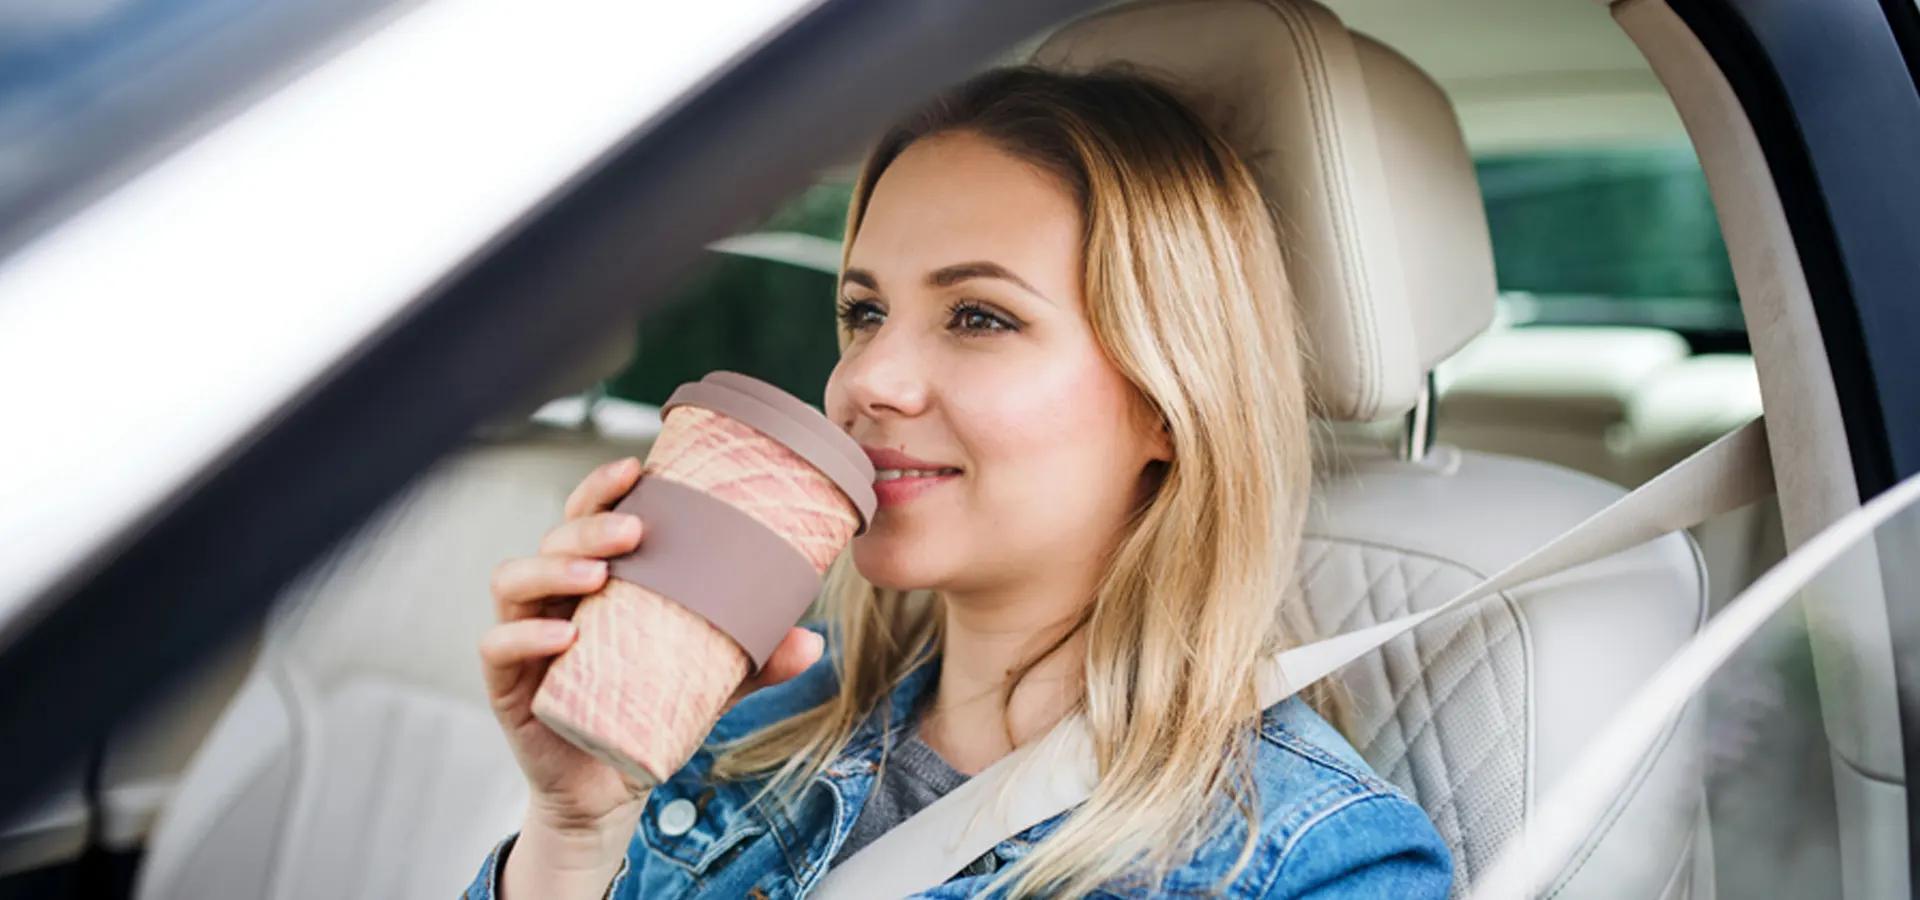 Woman sitting in car drinking coffee